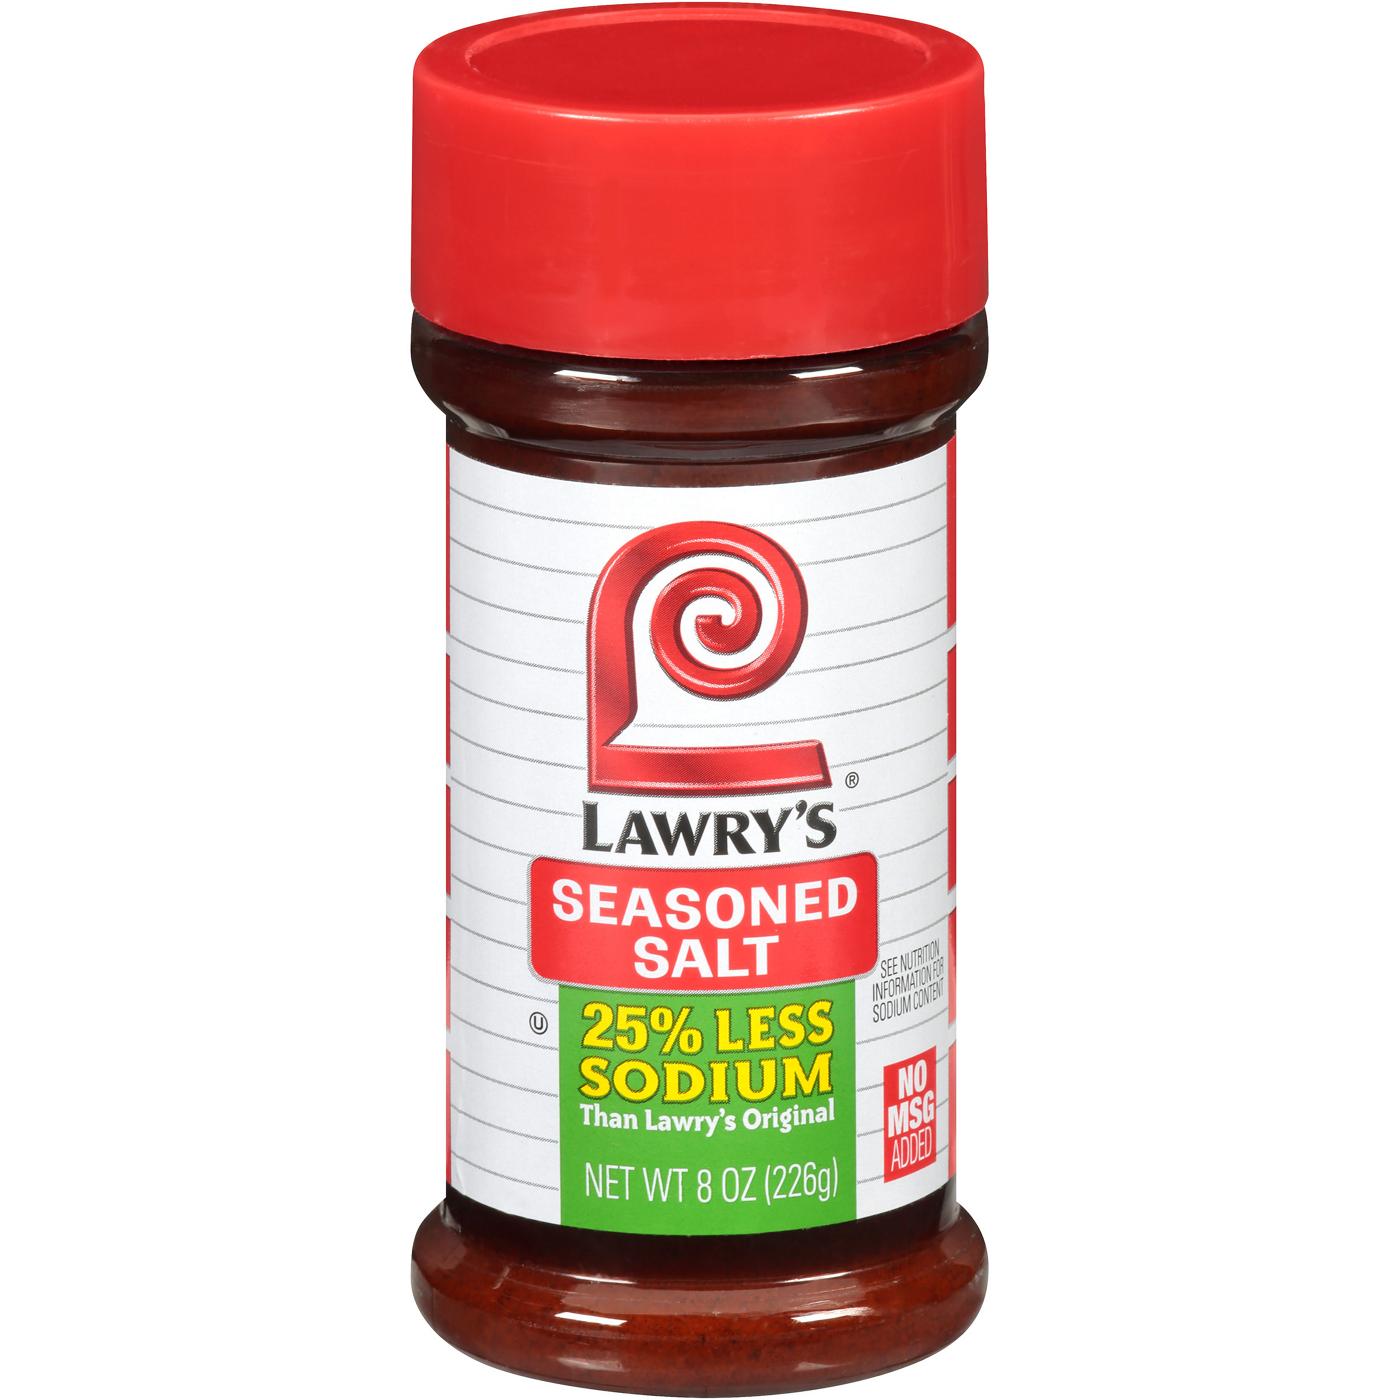 Lawry's 25% Less Sodium Seasoned Salt; image 1 of 4